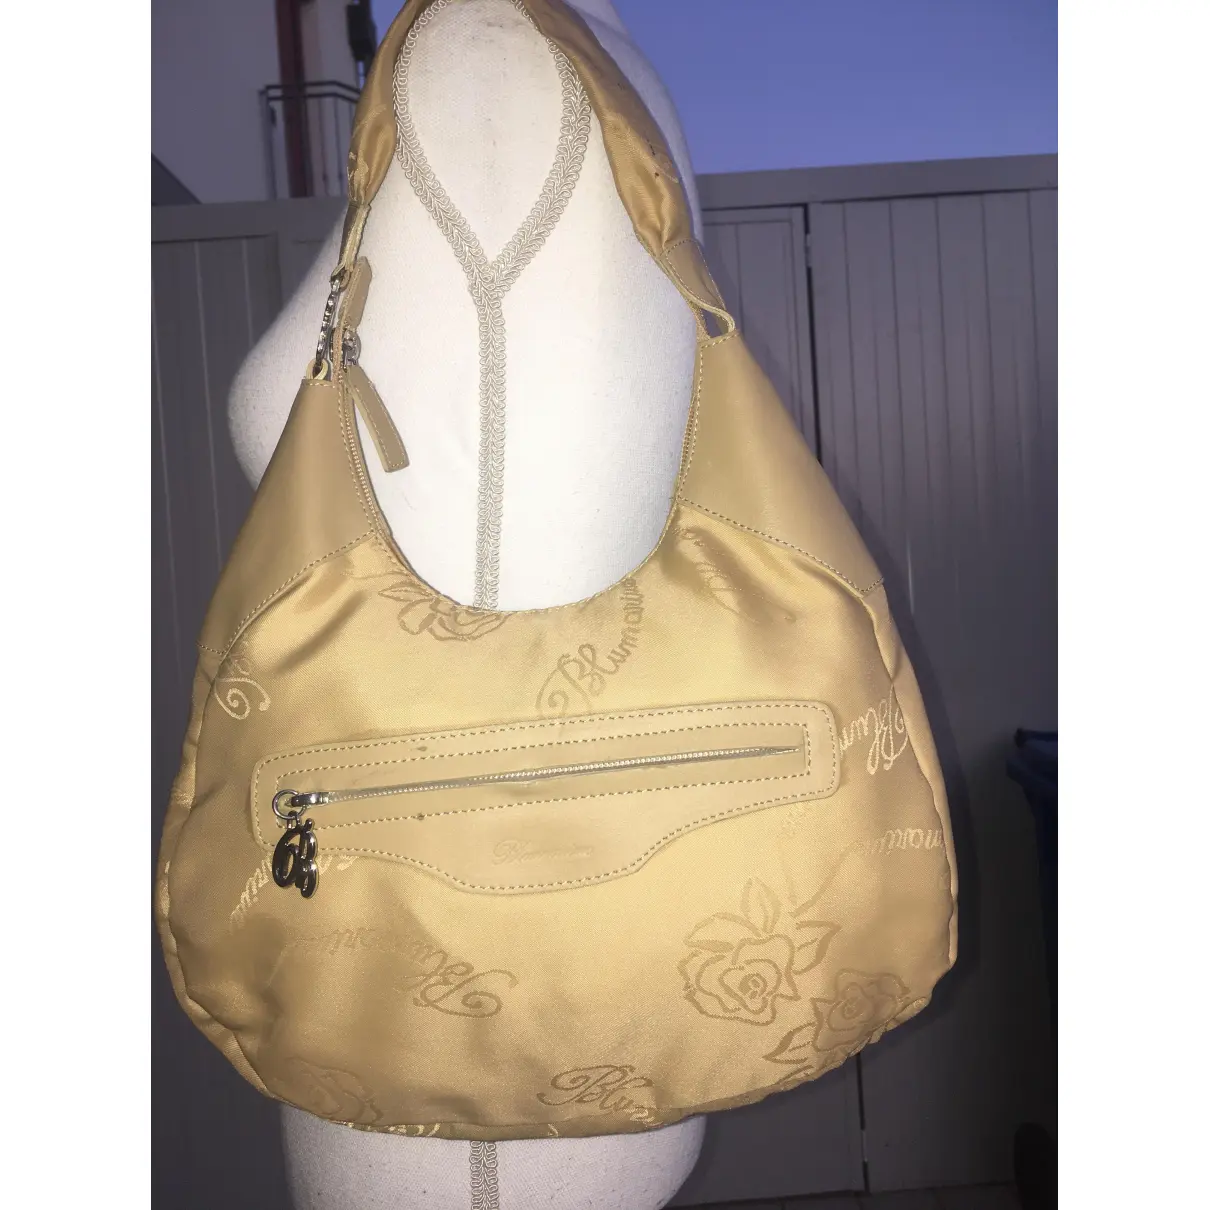 Buy Blumarine Cloth handbag online